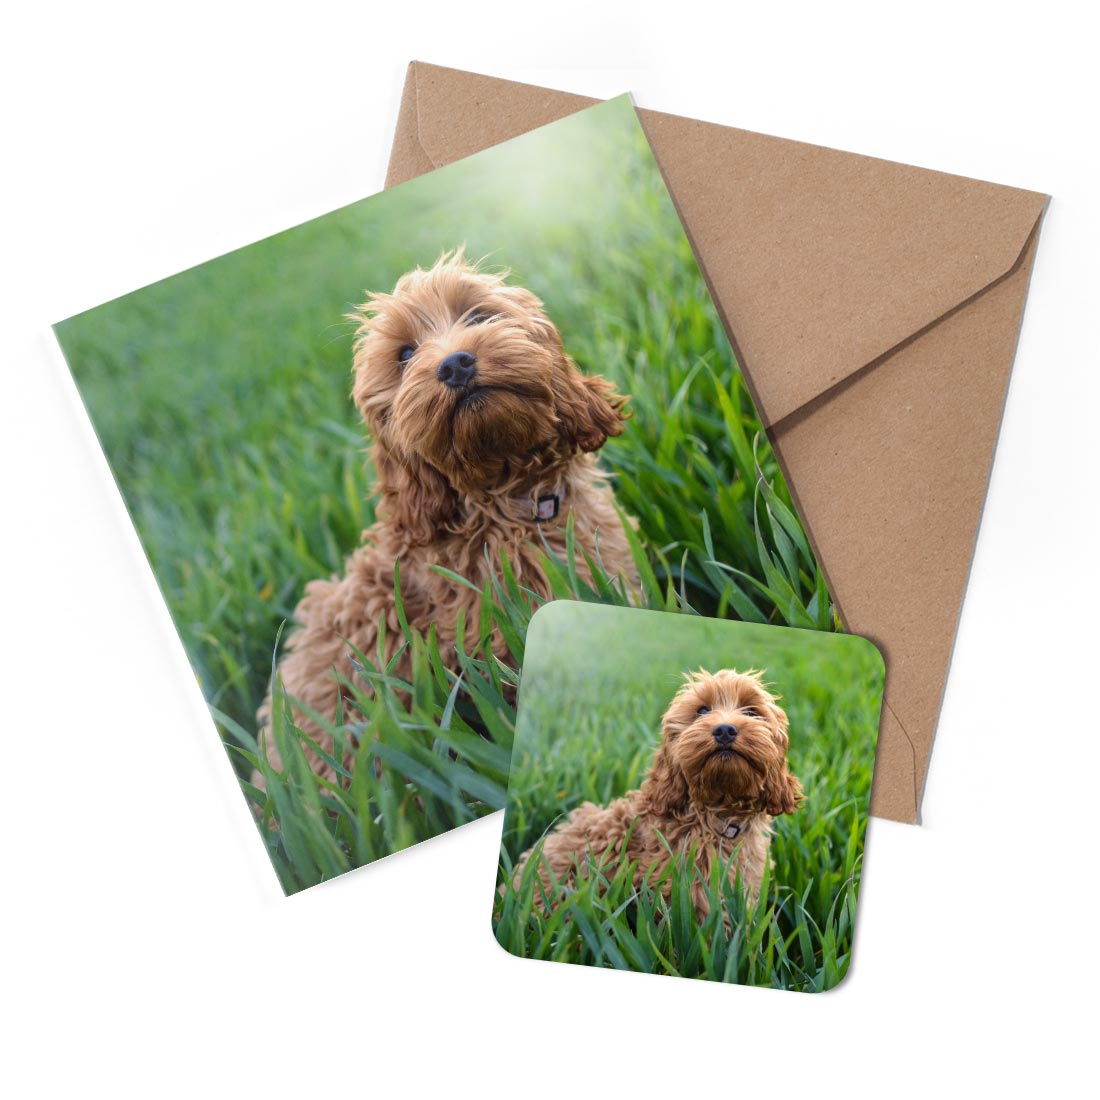 1 x Greeting Card & Coaster Set - Cockapoo Puppy Dog #50557